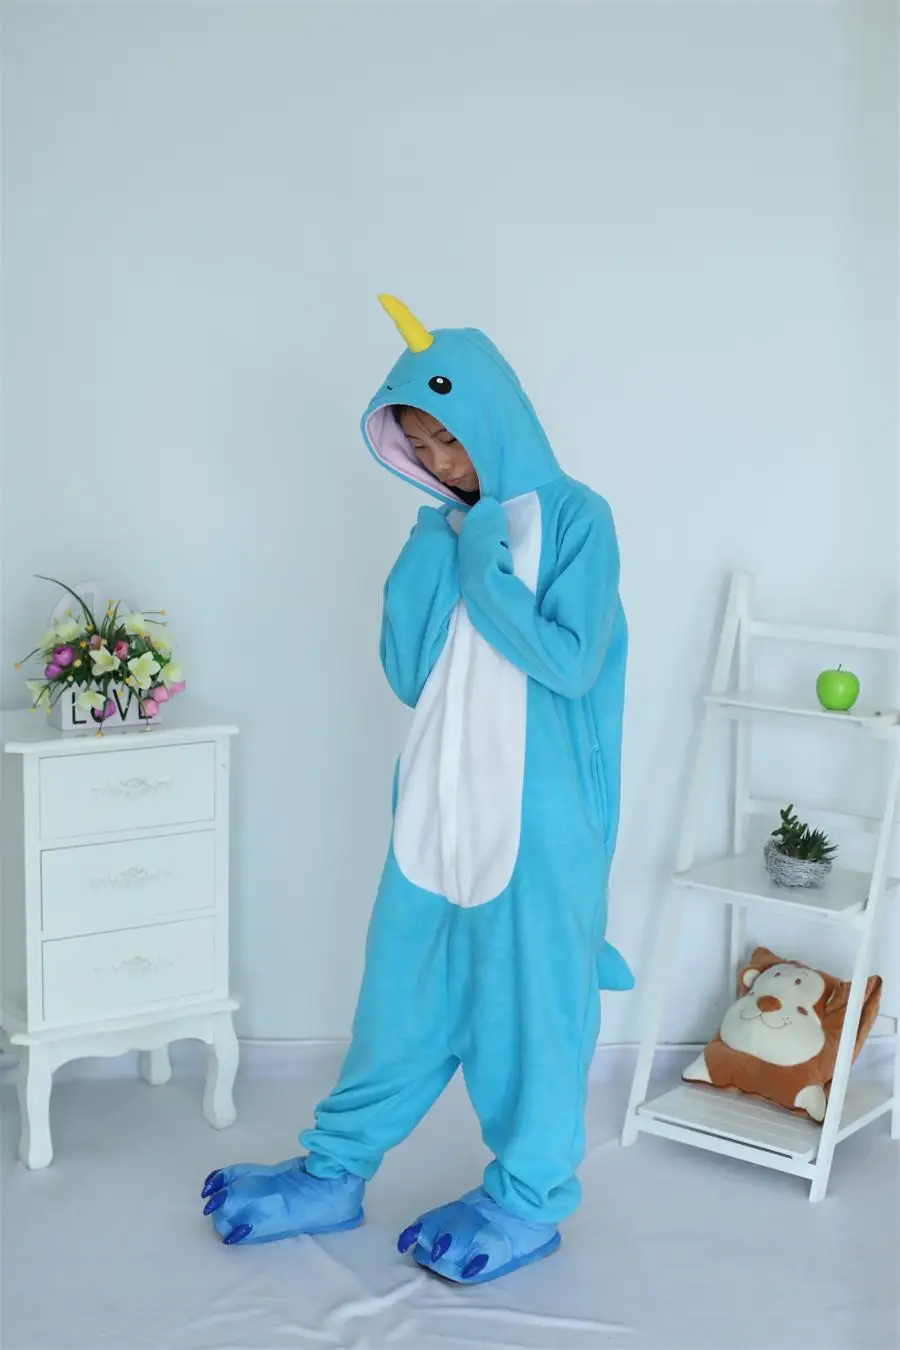 

New Adult Narwhal Pajamas Animal Cosplay Costume Sleepwear Pyjamas Unisex Onesies Cartoon Sleepsuit